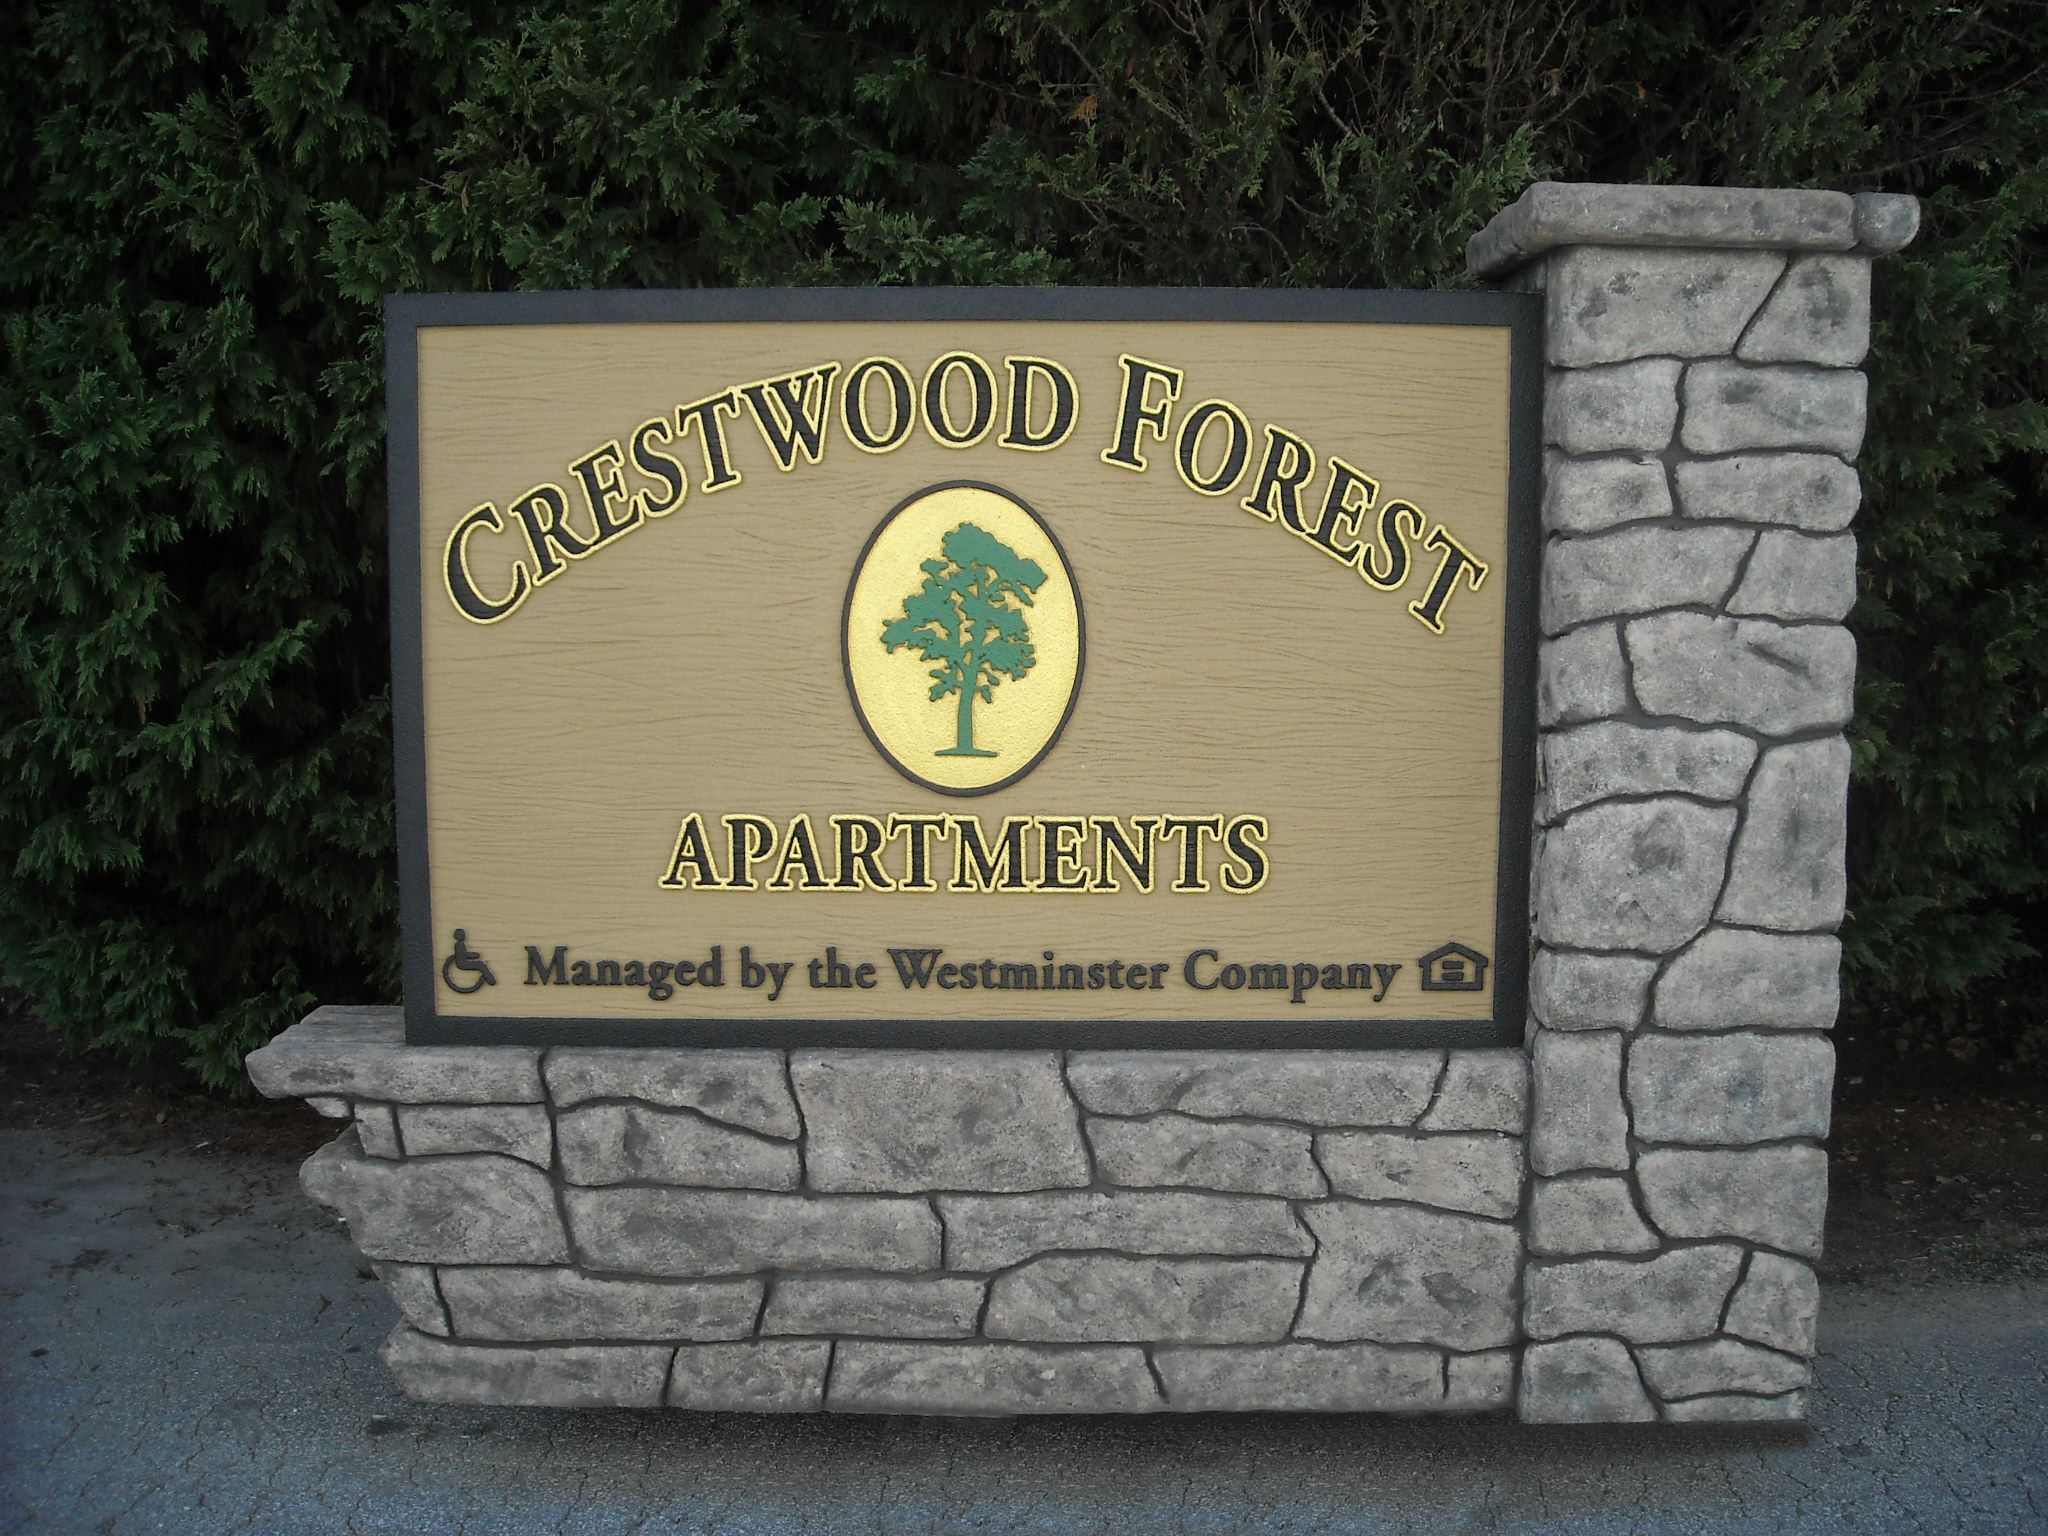 Crestwood Forest.jpg